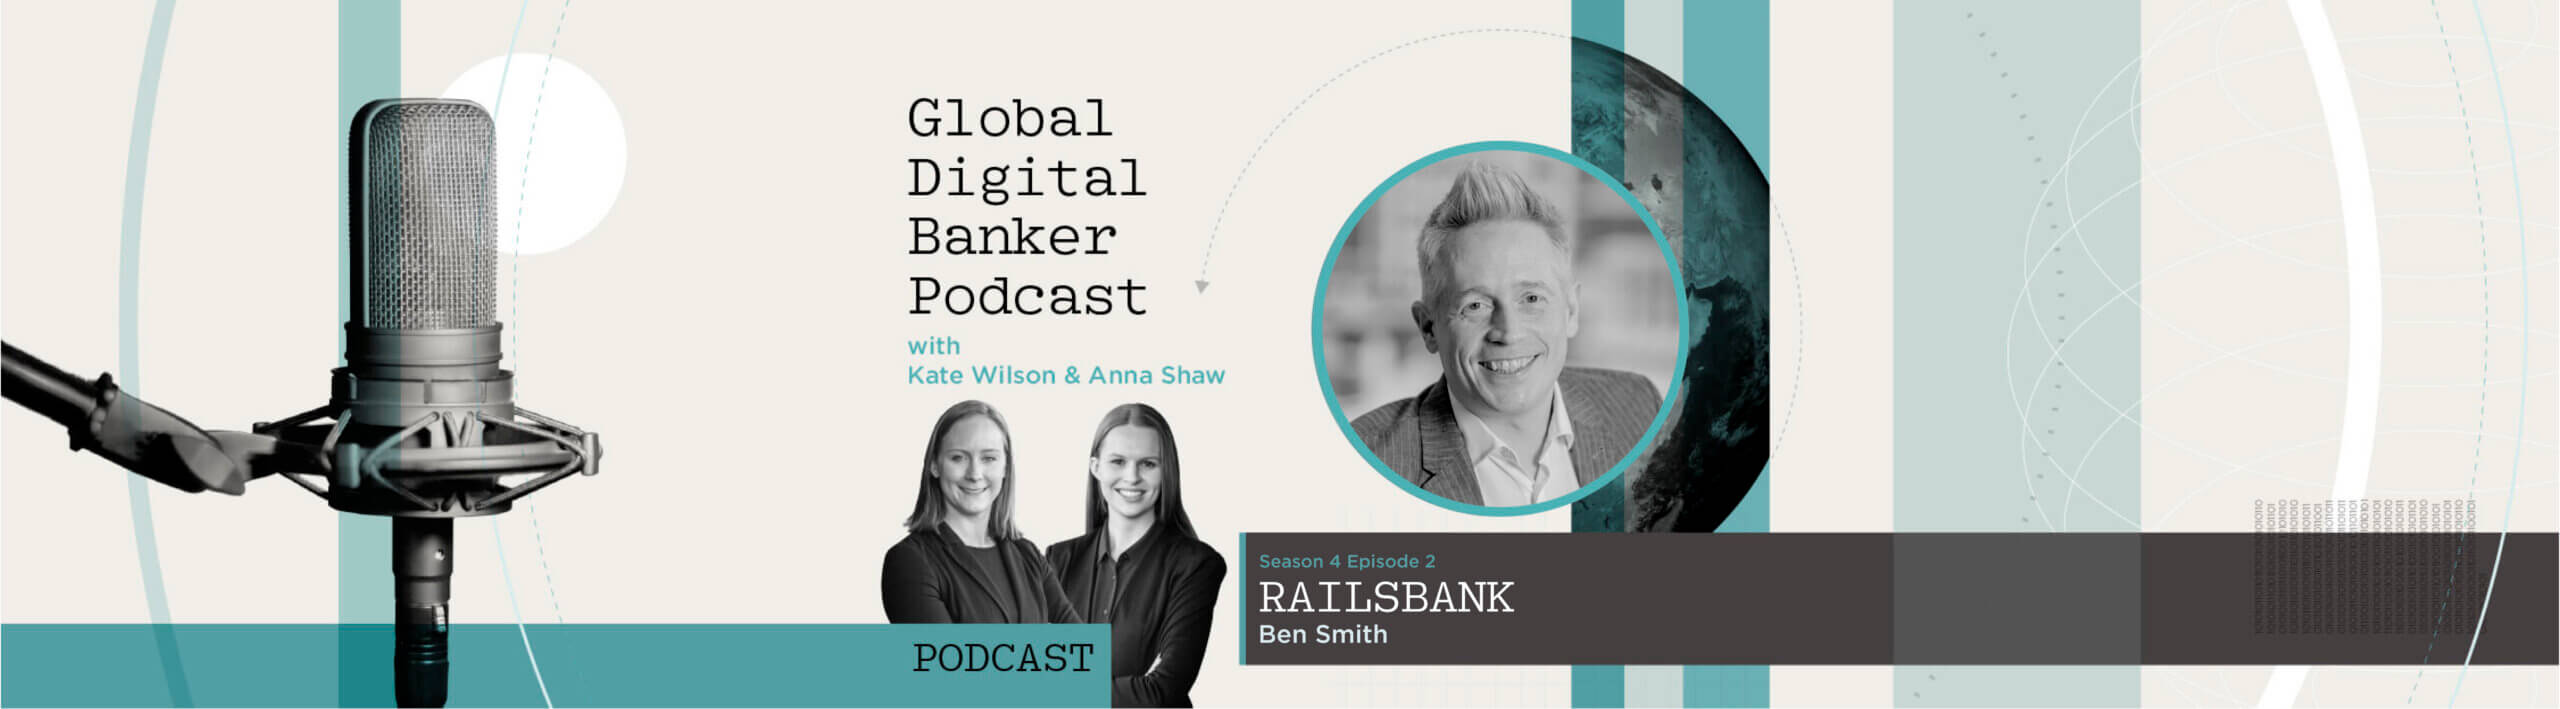 RFI Global GDB Podcast Railsbank